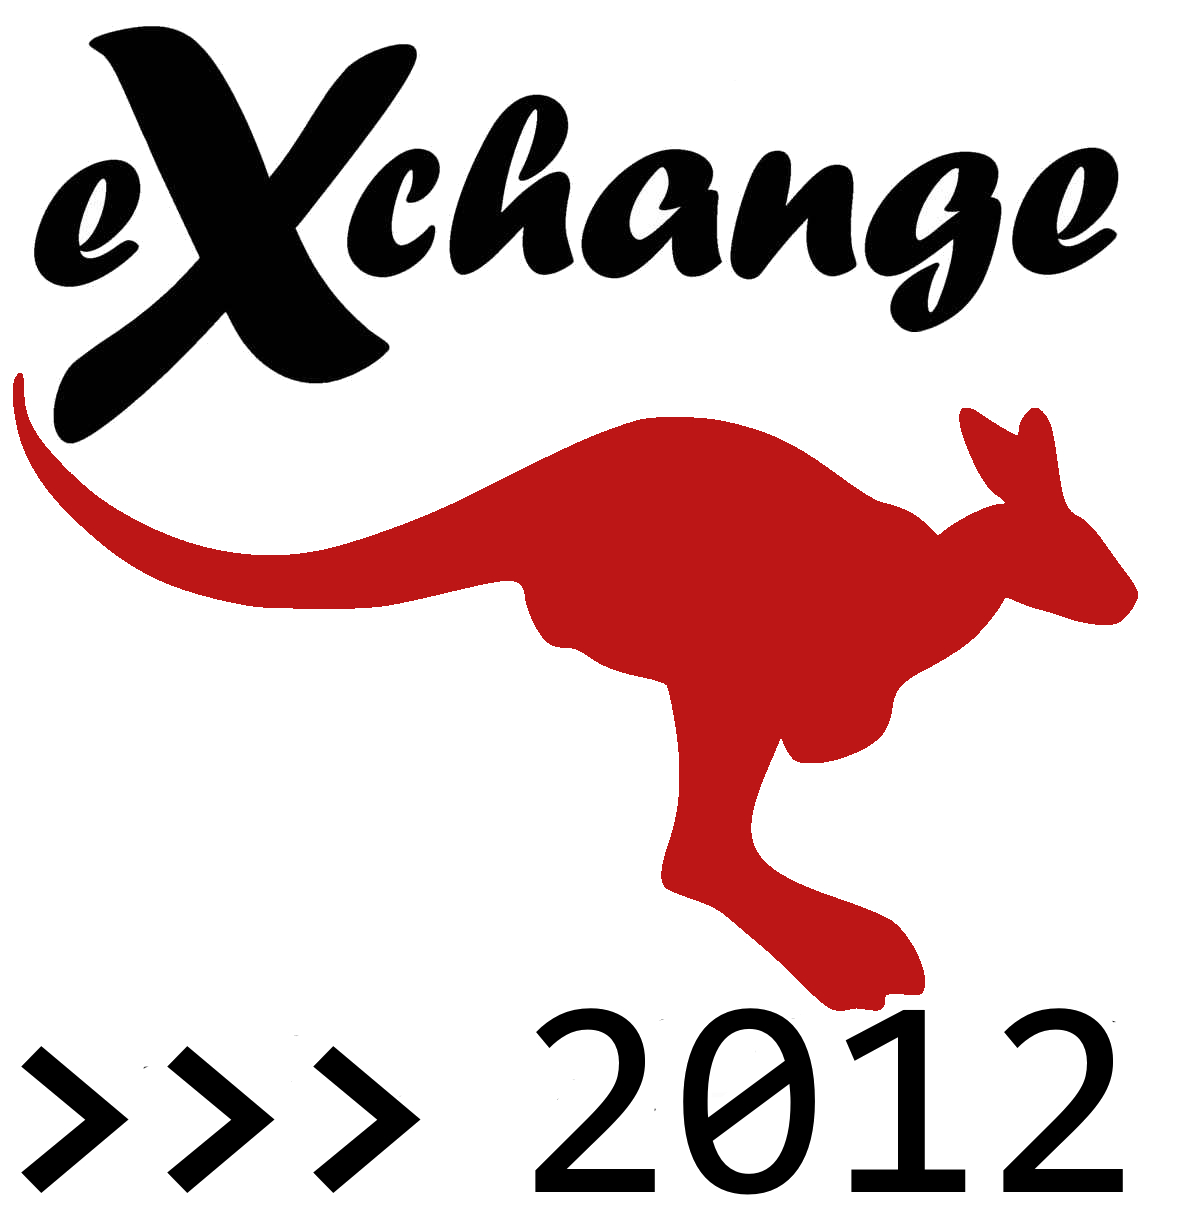 eXchange 2012